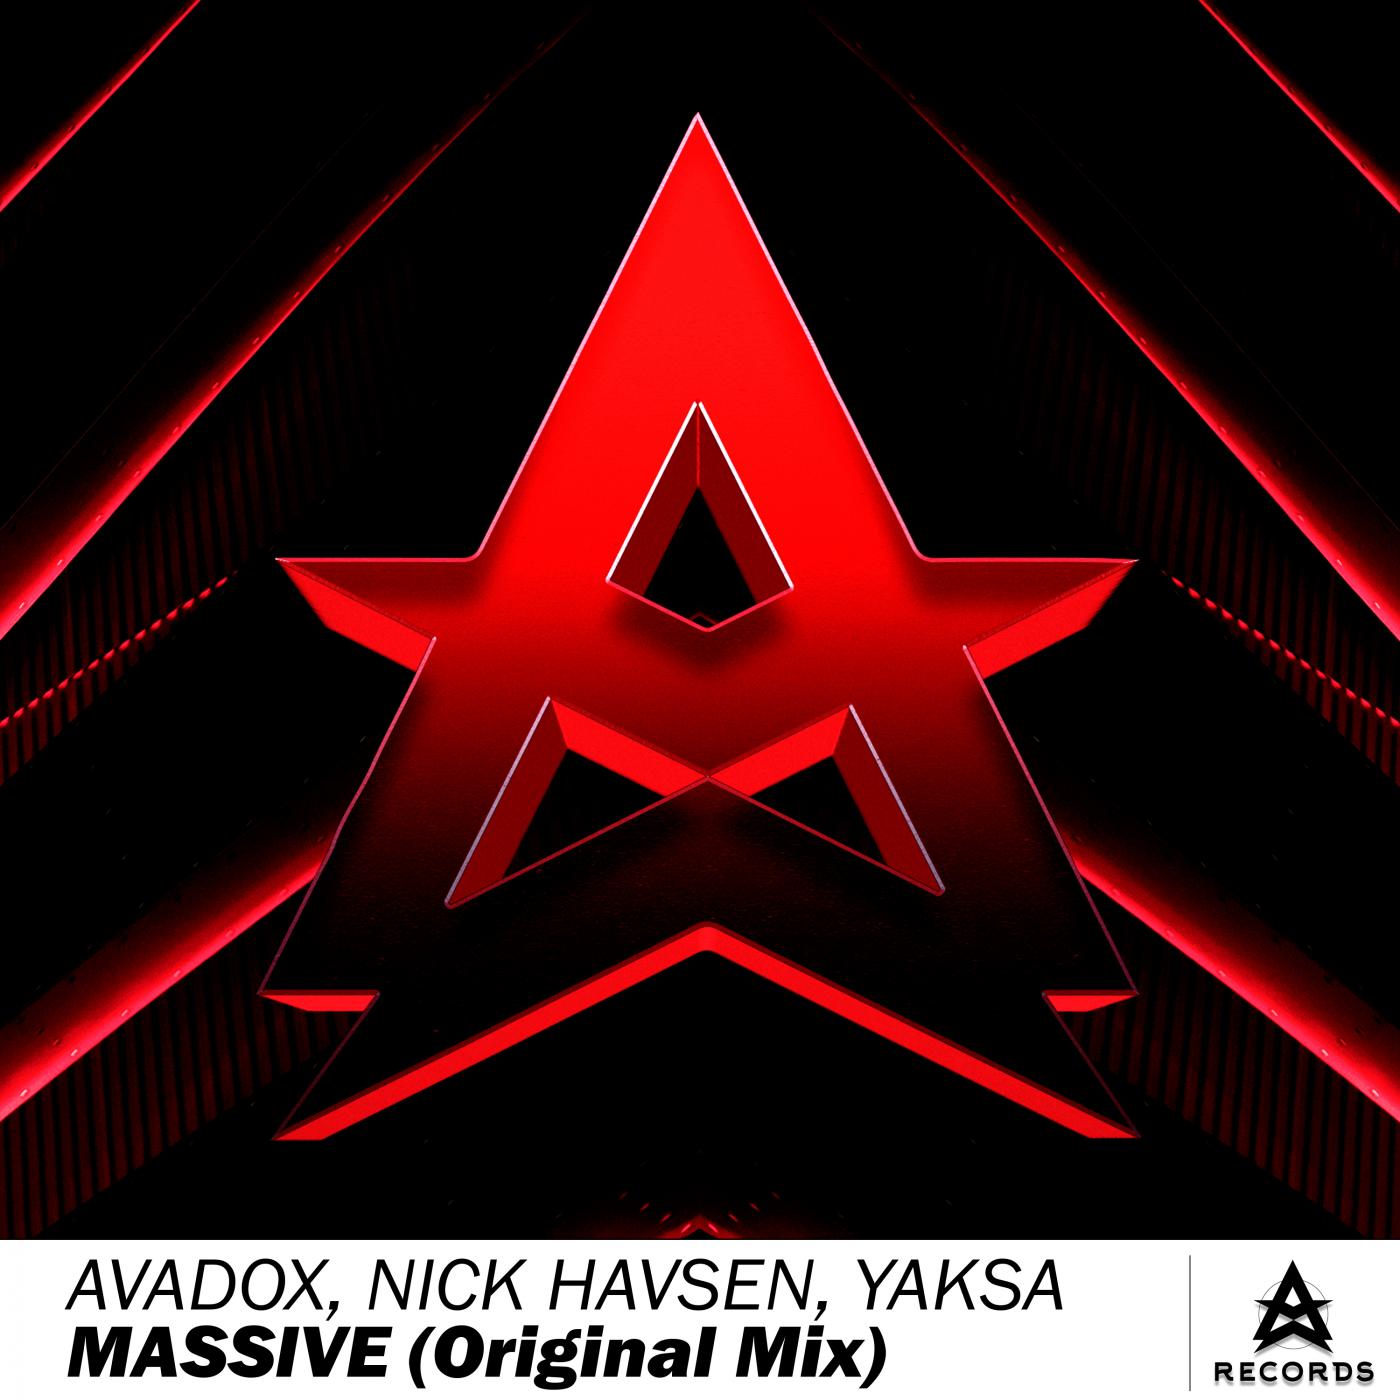 AVADOX NICK HAVSEN YAKSA - Massive (Original Mix)